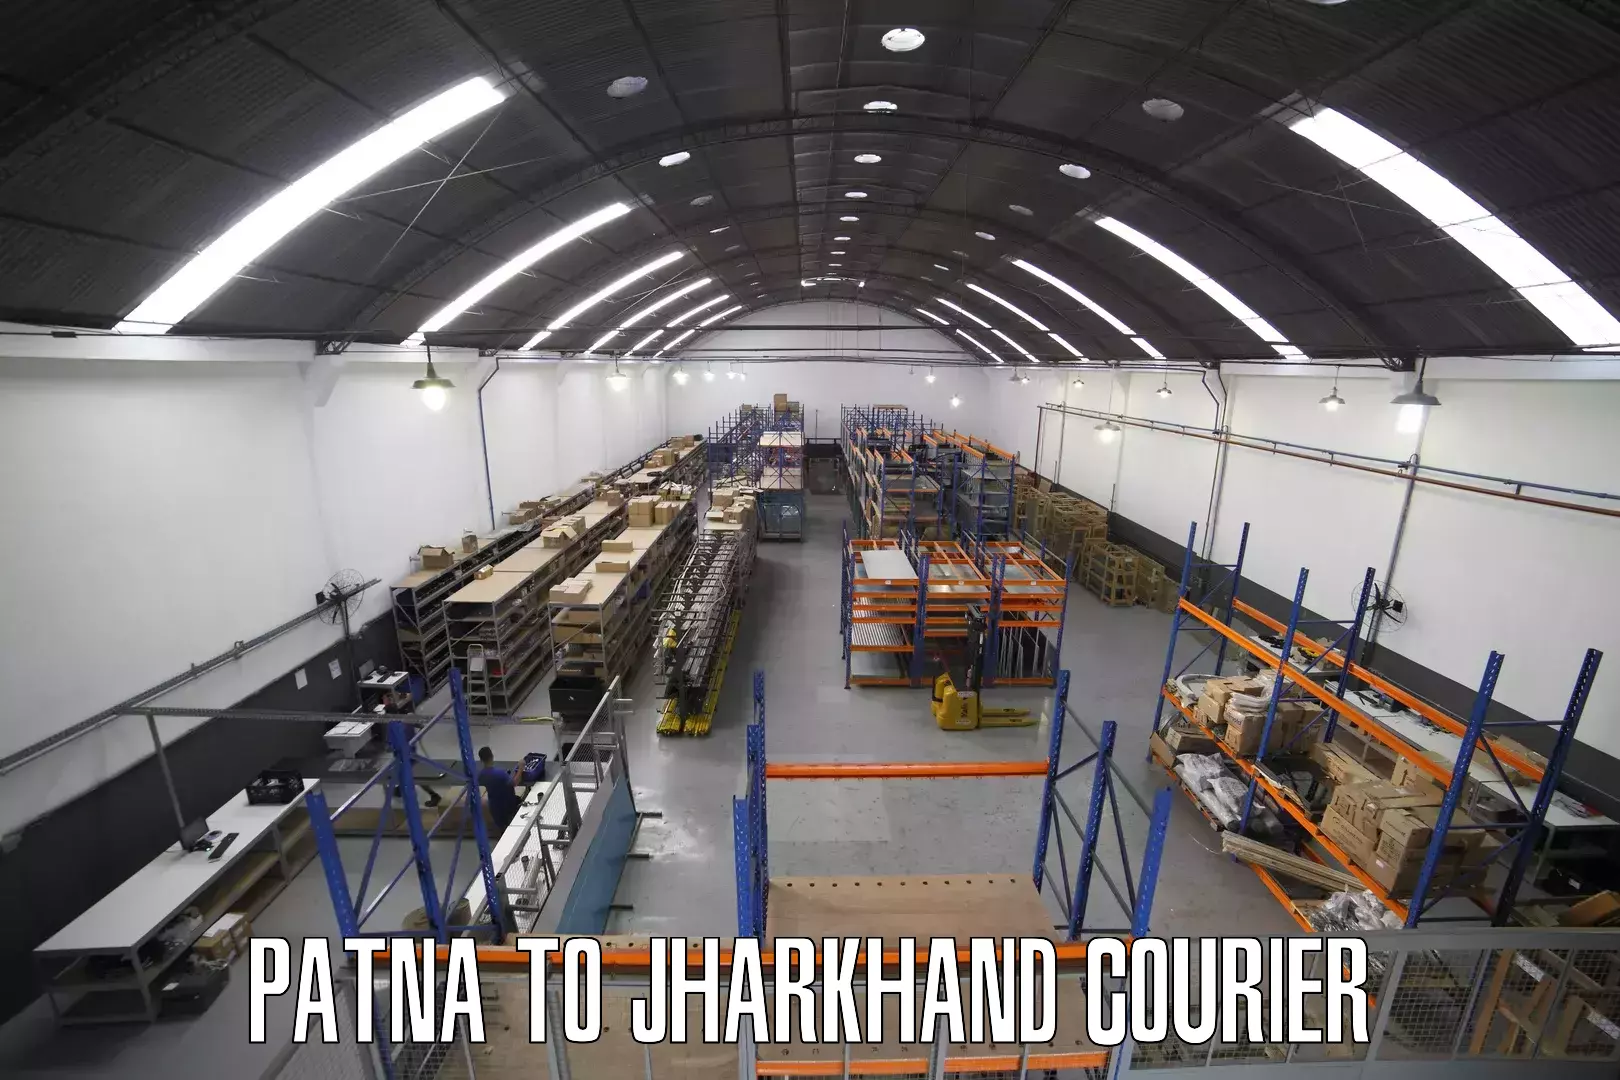 State-of-the-art courier technology Patna to Lohardaga